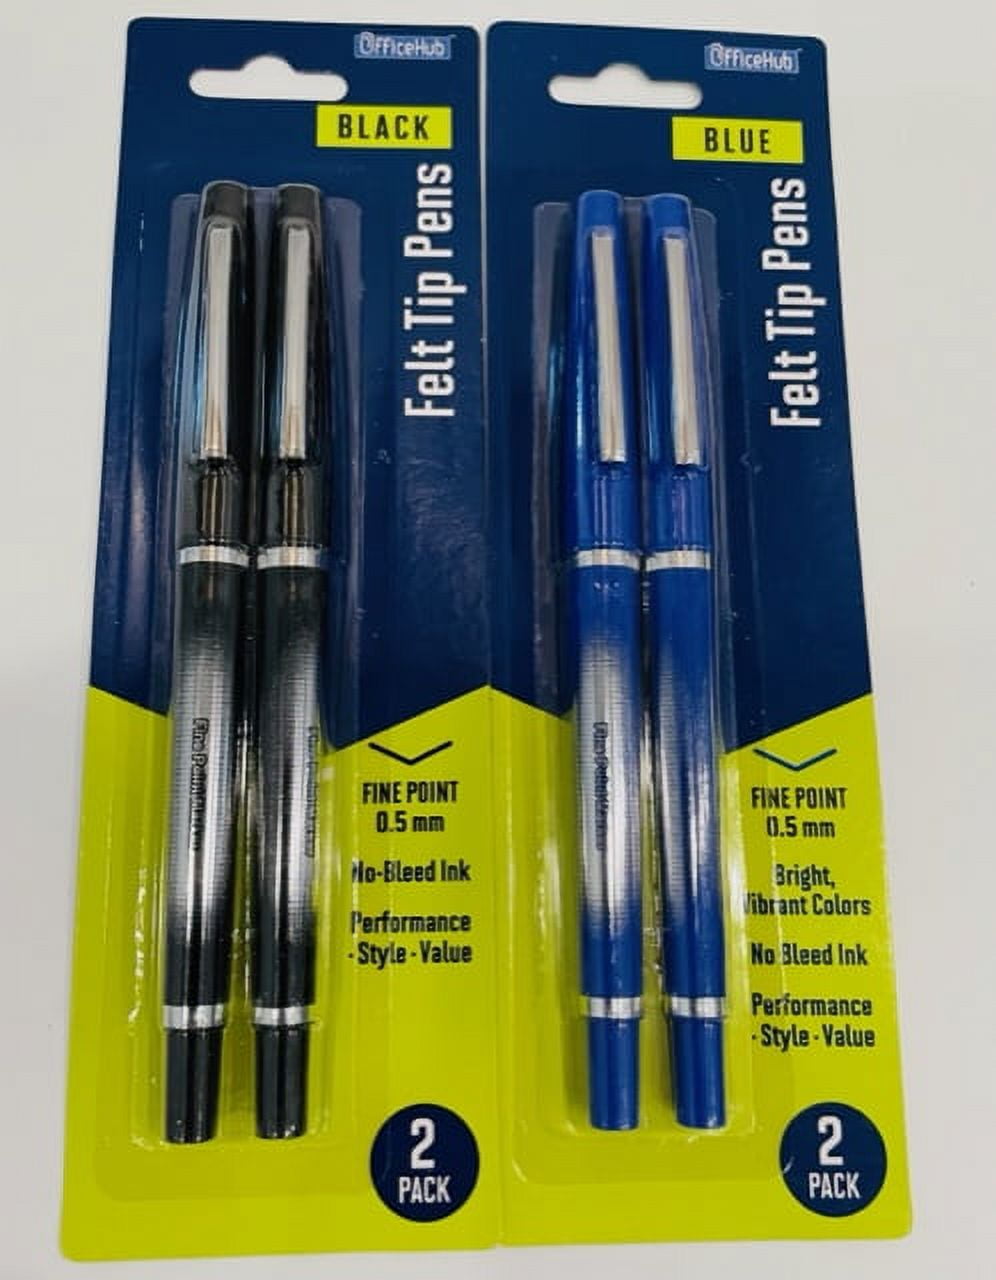 Medium Point Pen Set, Candy Shop (5 ct)